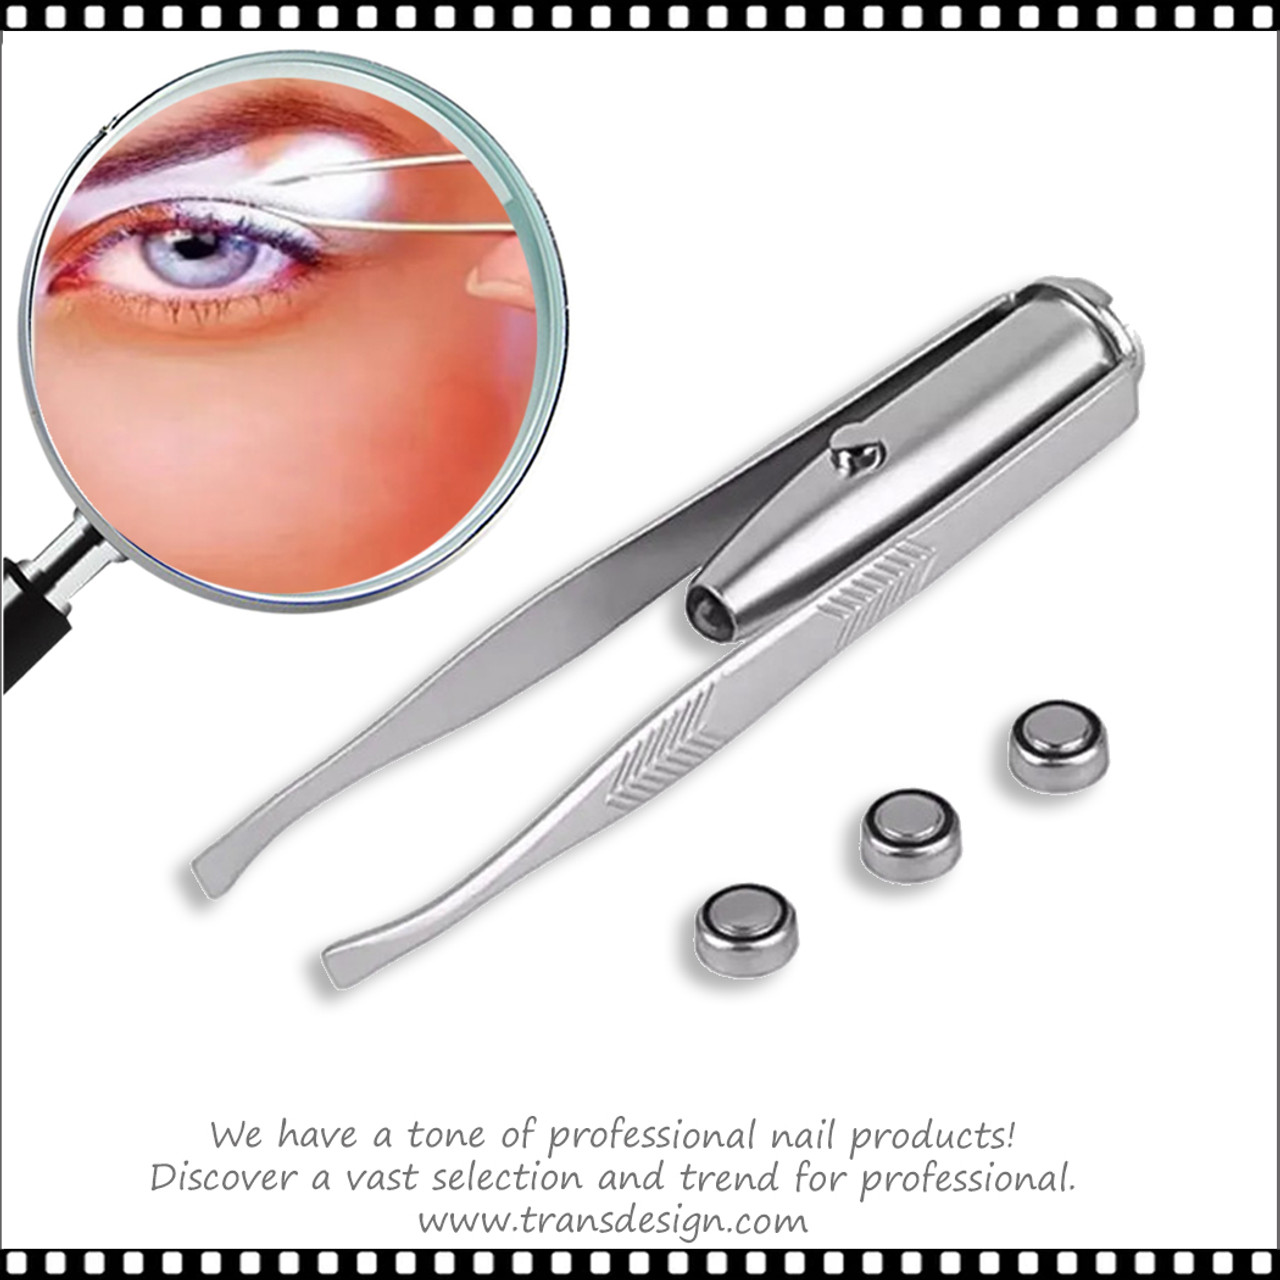 LED Eyebrow Tweezers - Lighted Slanted Tip Makeup Tools – TweezerCo